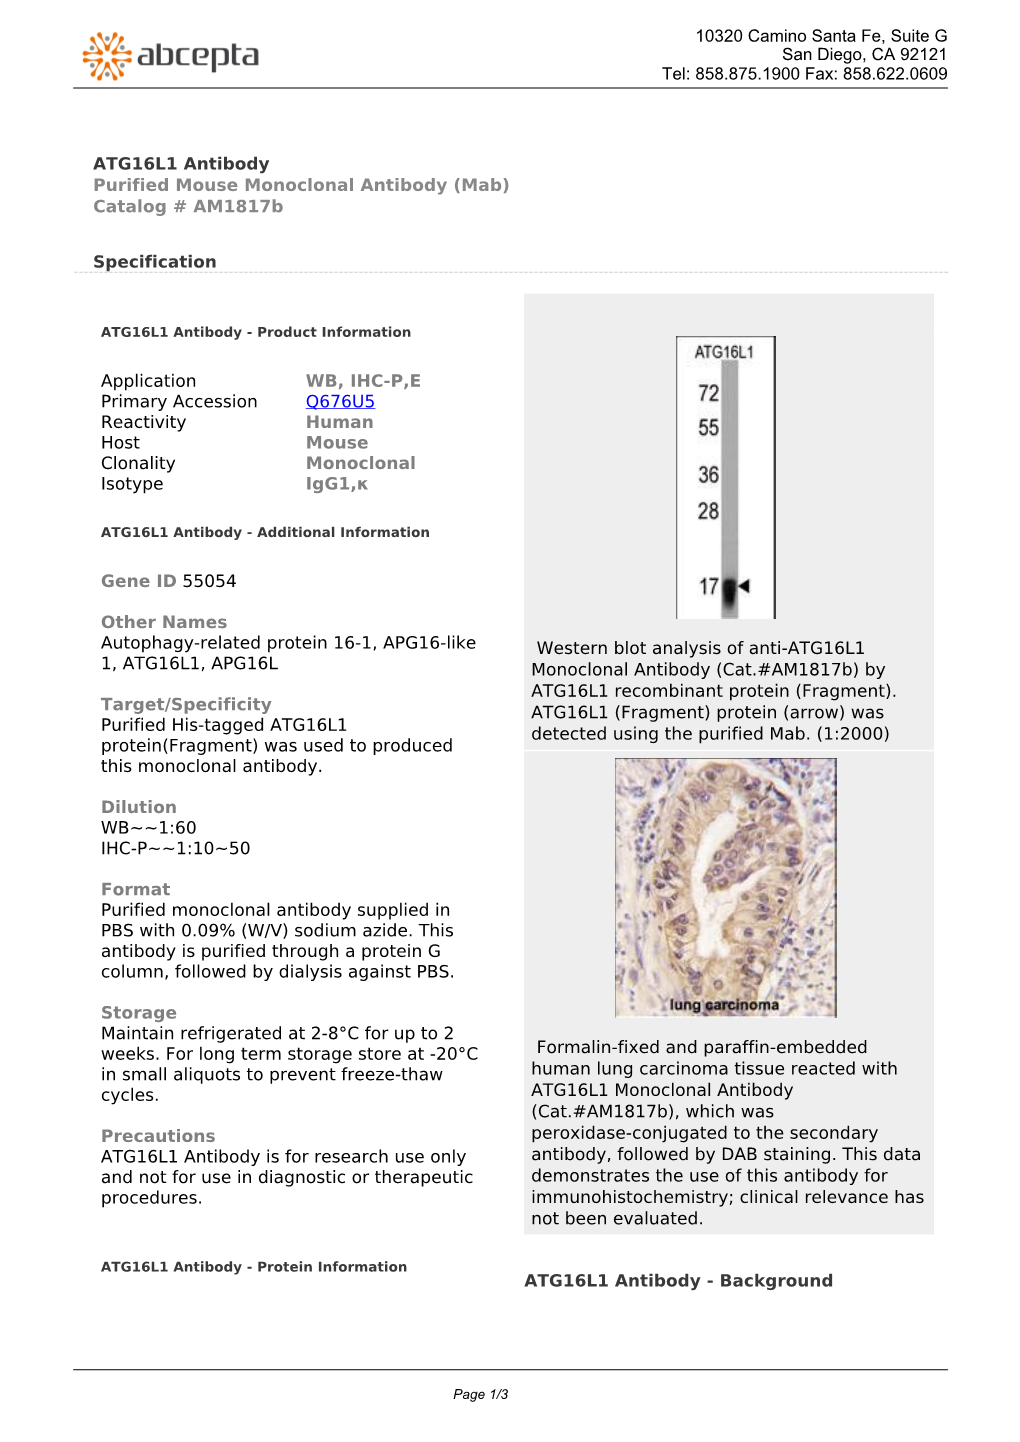 ATG16L1 Antibody Purified Mouse Monoclonal Antibody (Mab) Catalog # Am1817b